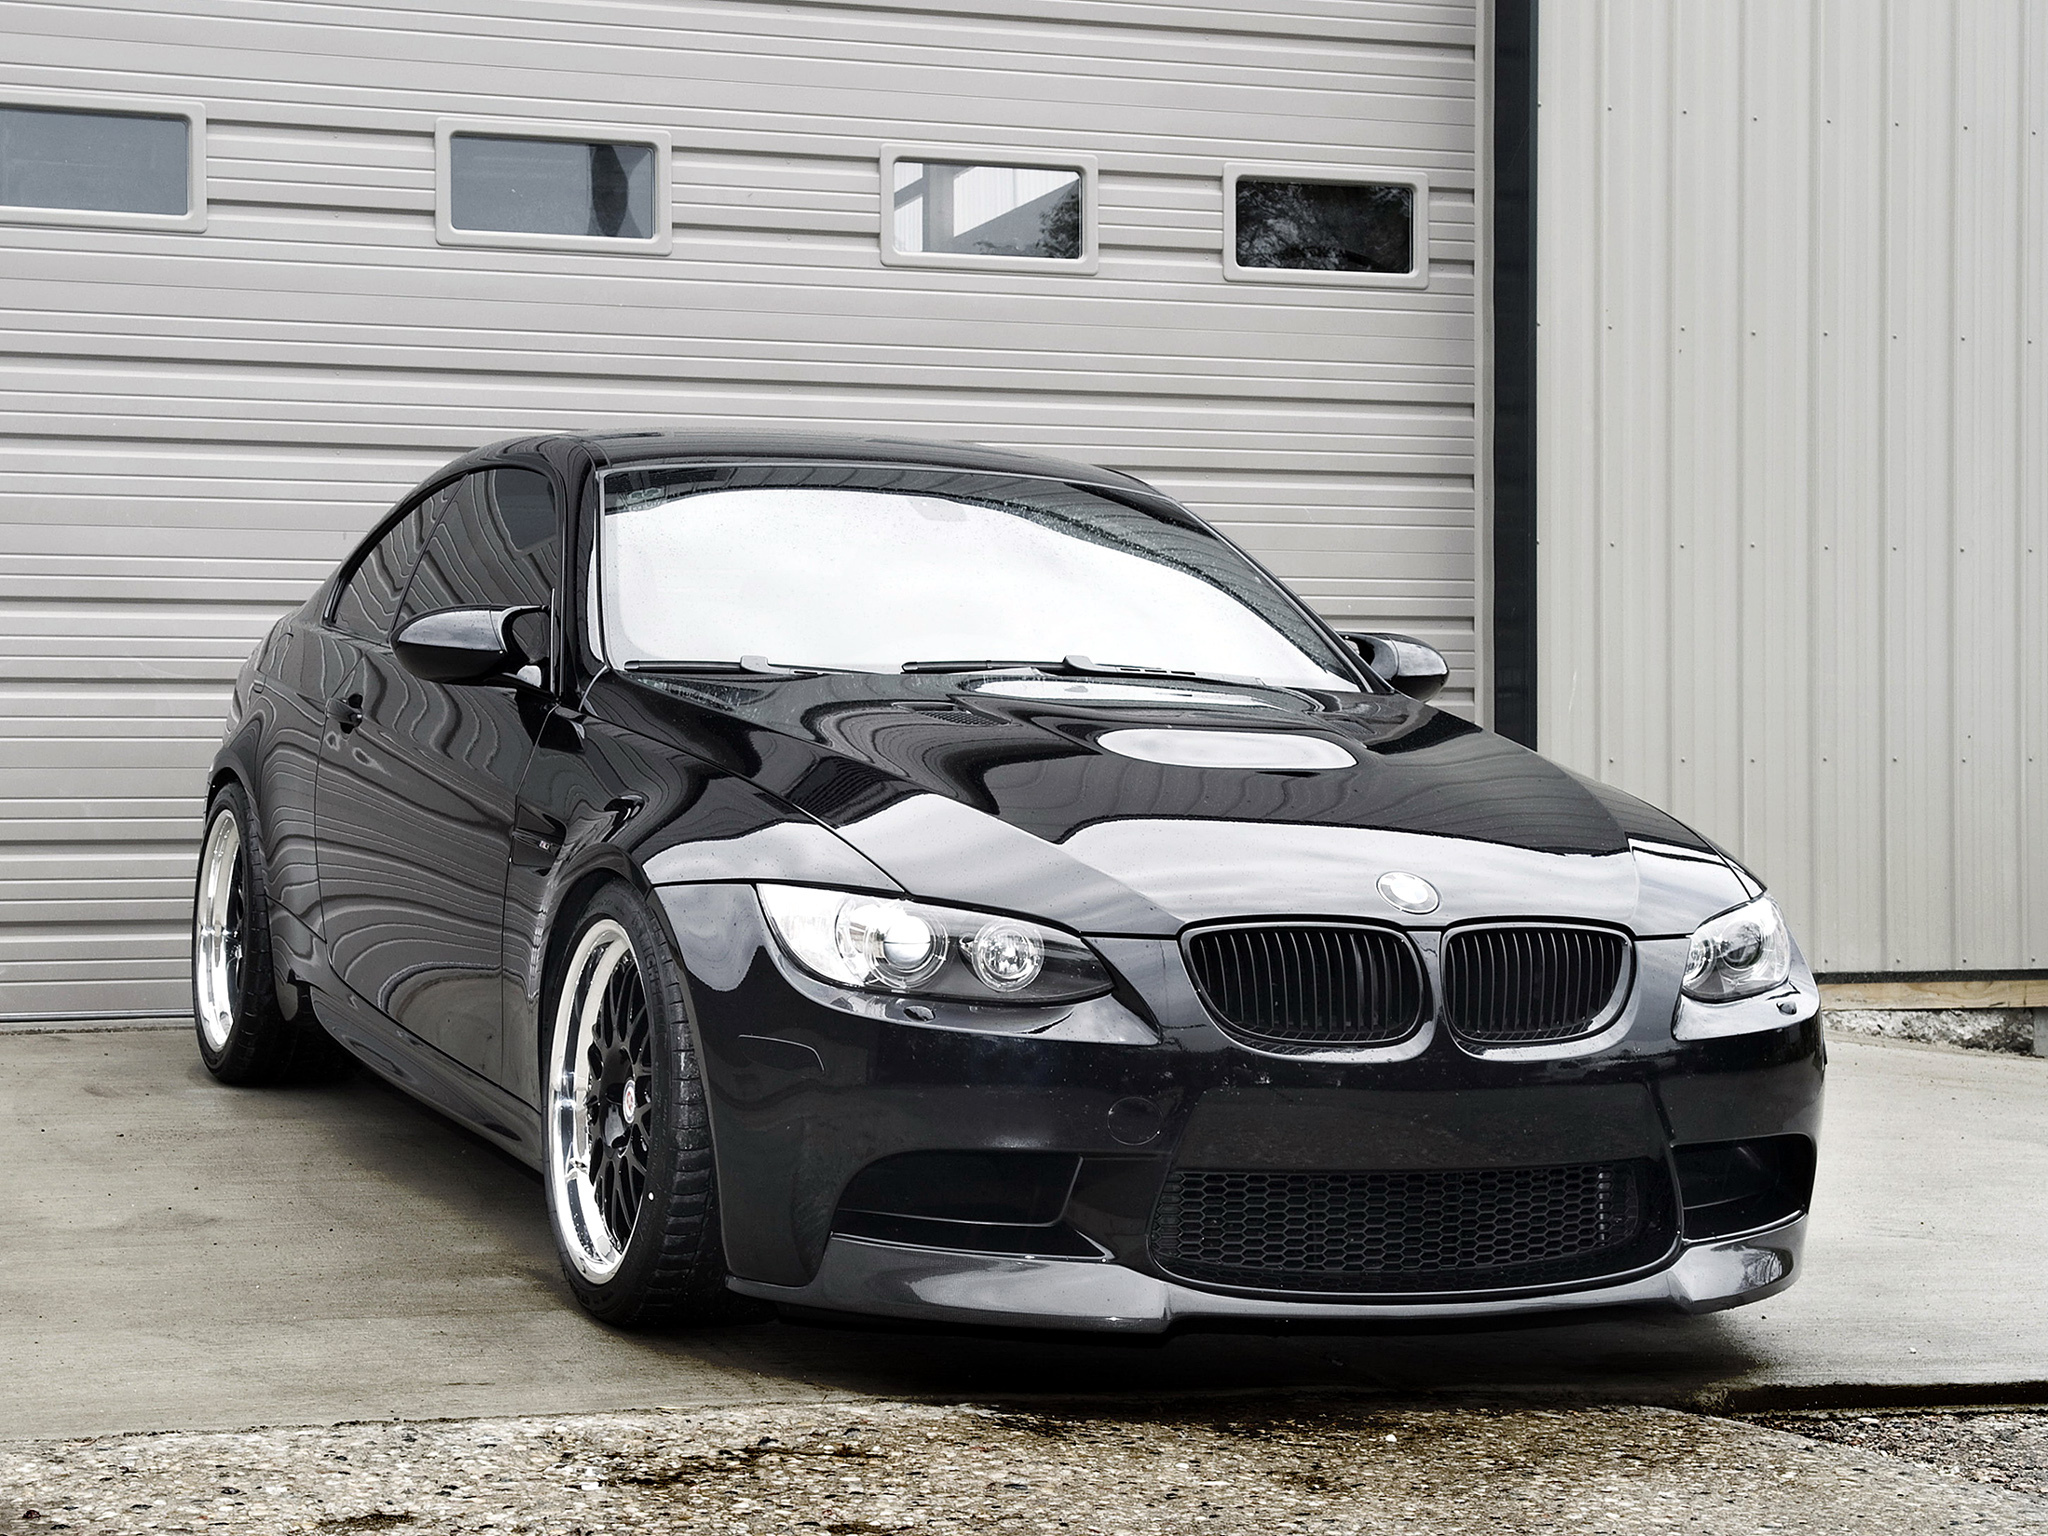 Картинки бмв. BMW e92 Coupe Black. BMW m3 e92 Black. BMW 3 купе черная. BMW m3 e92 Black 4k.